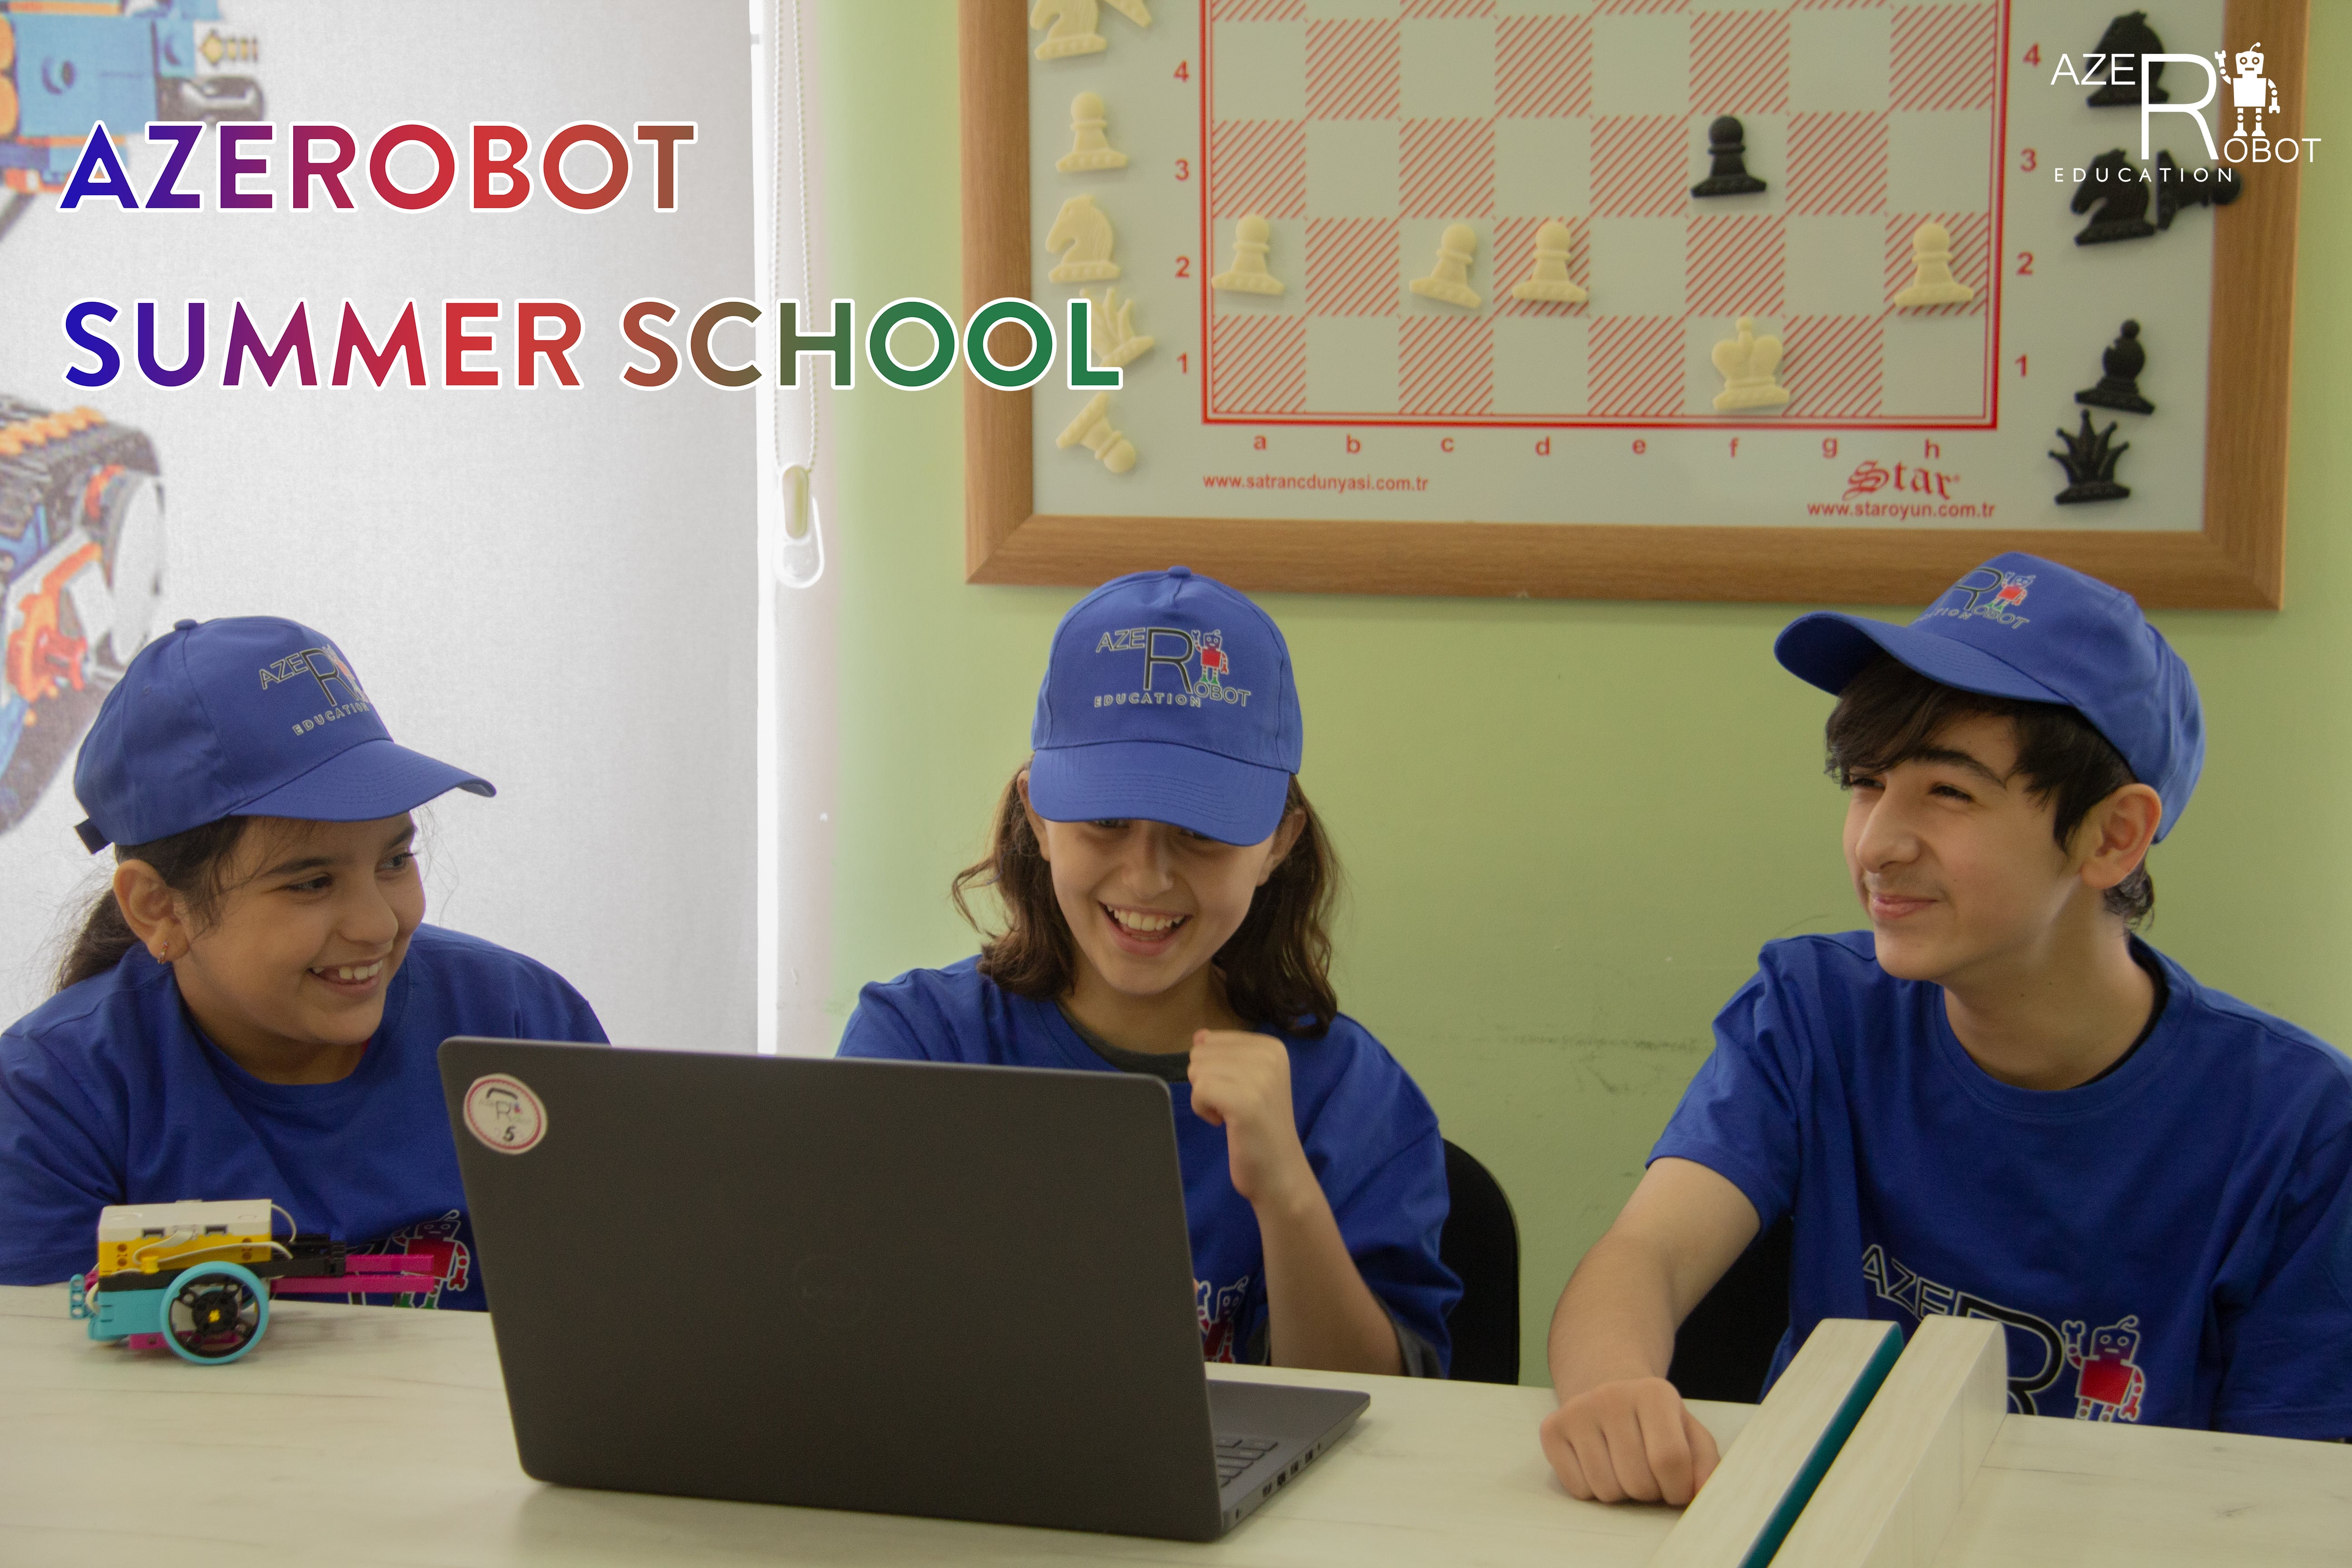 AzeRobot Summer School